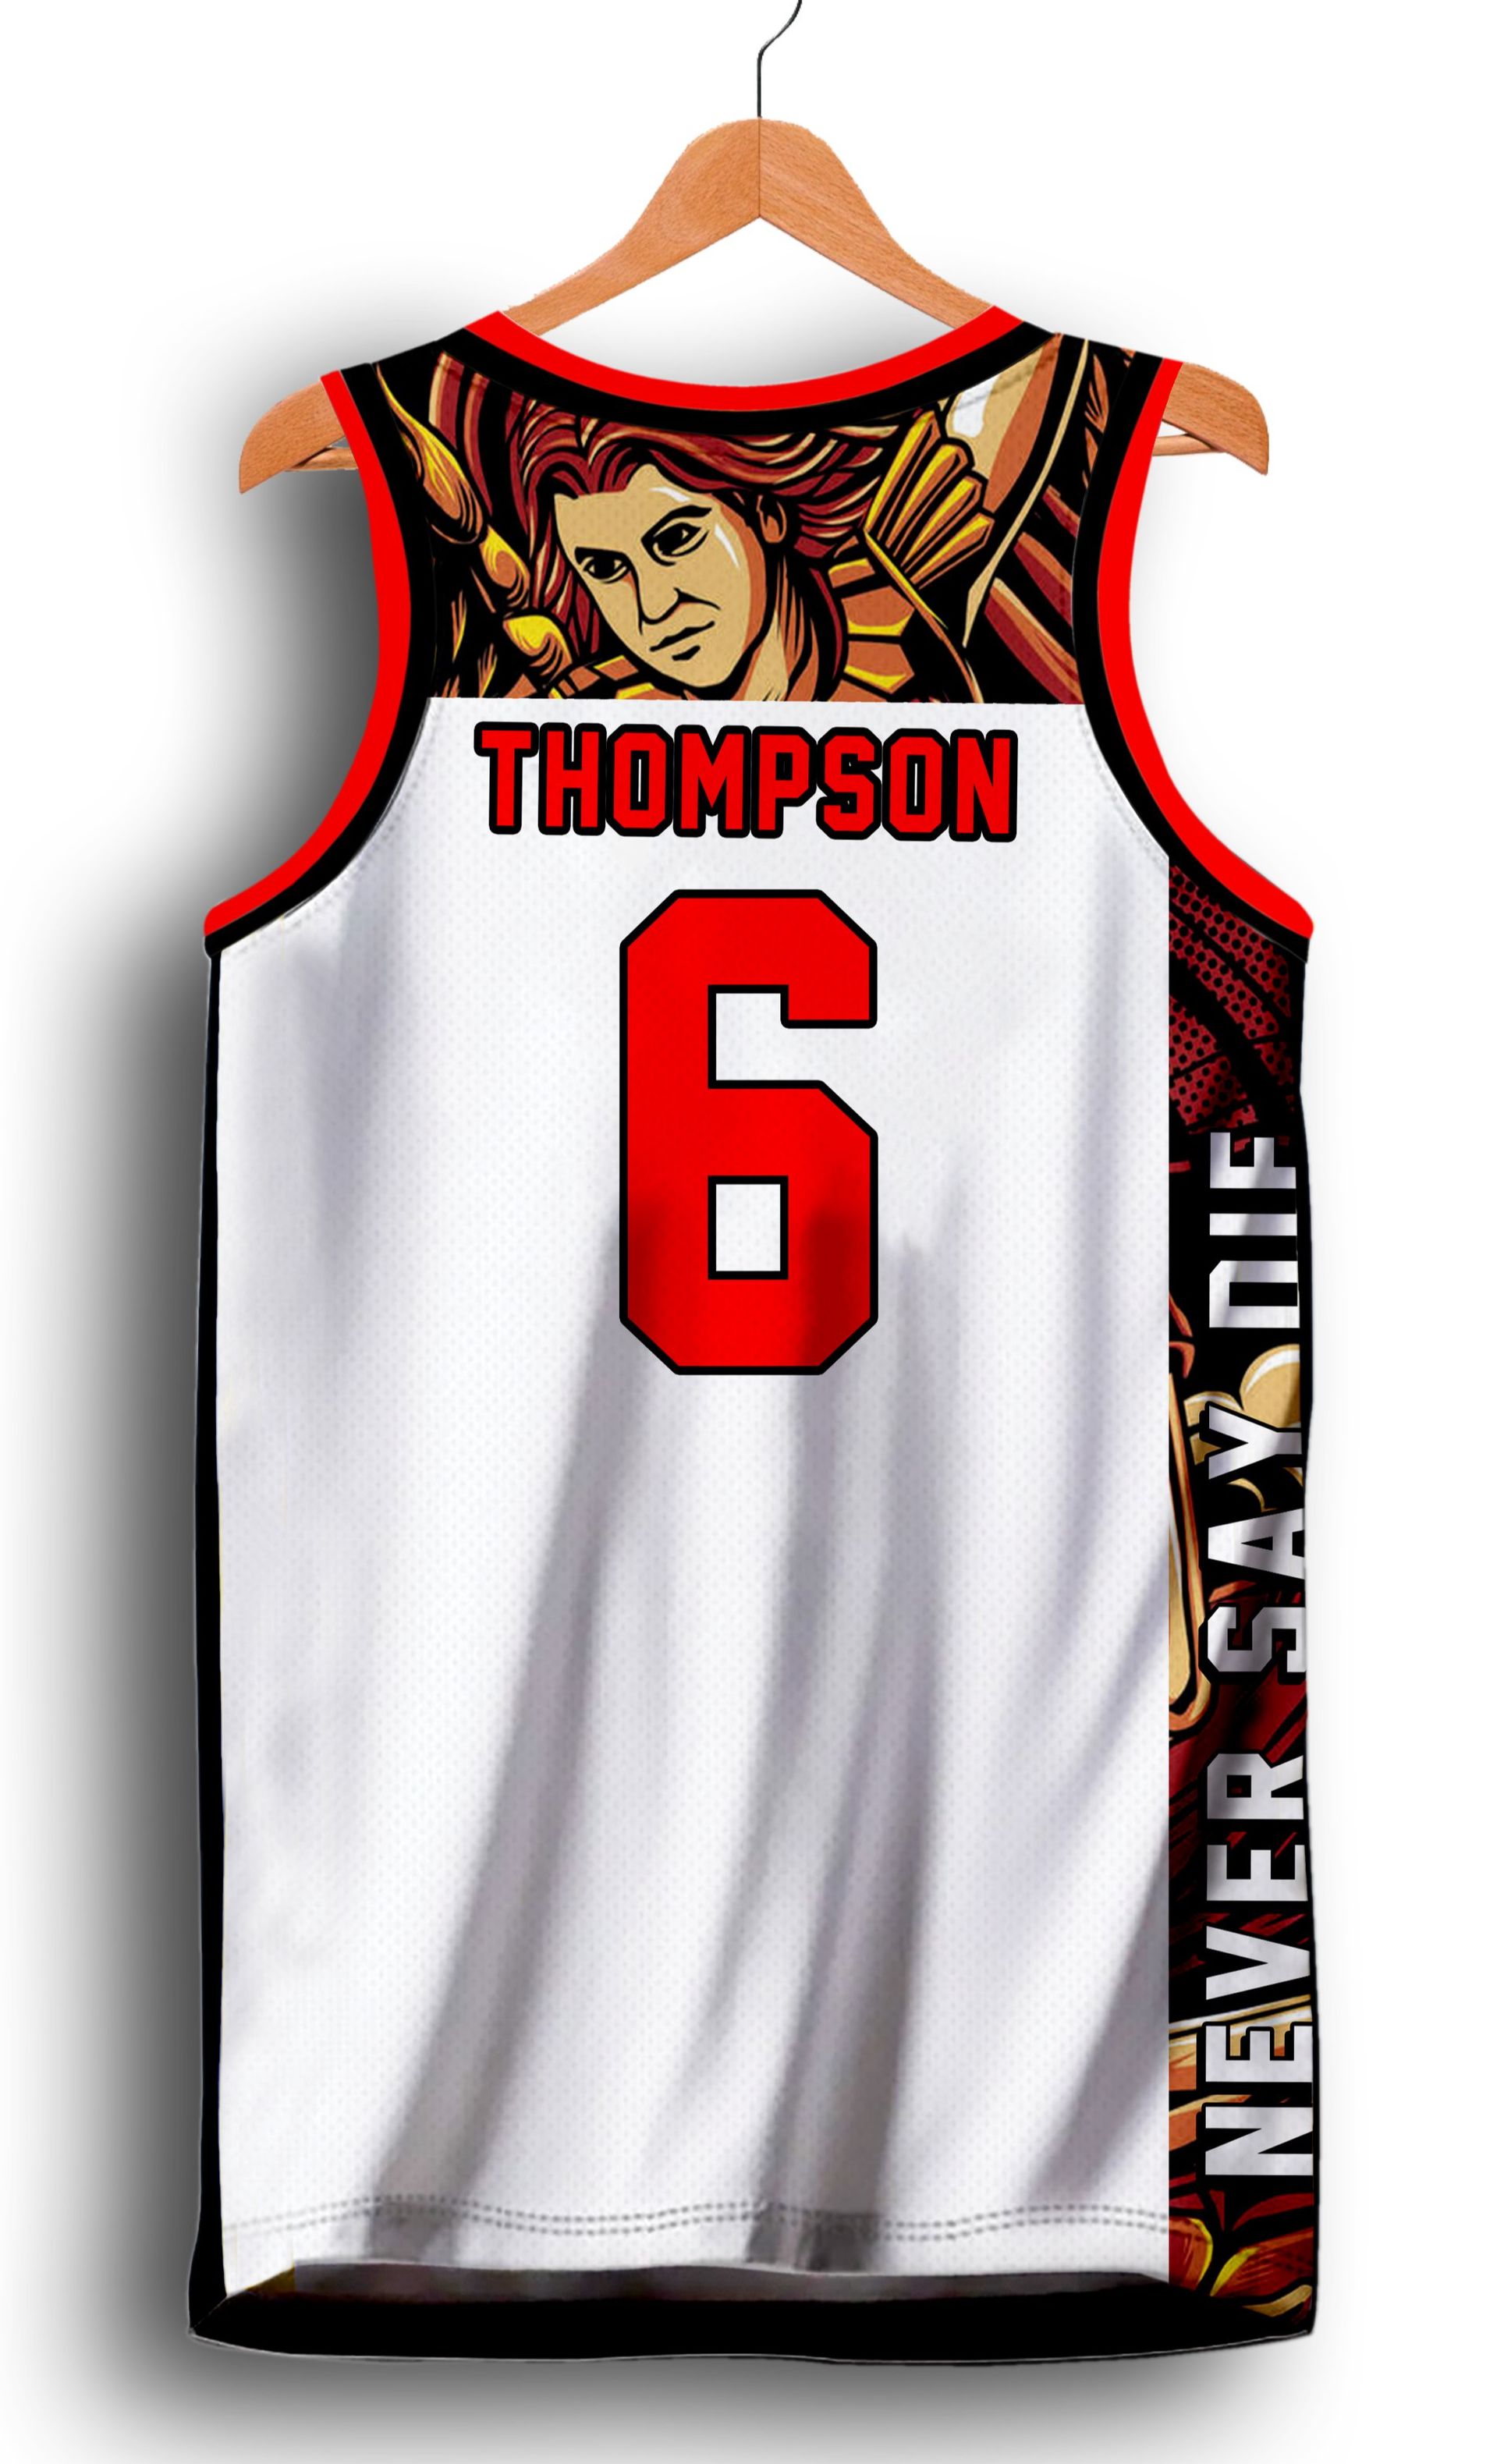 Scottie Thompson Lmtd. Ed. Ginebra Basketball Jersey, Men's